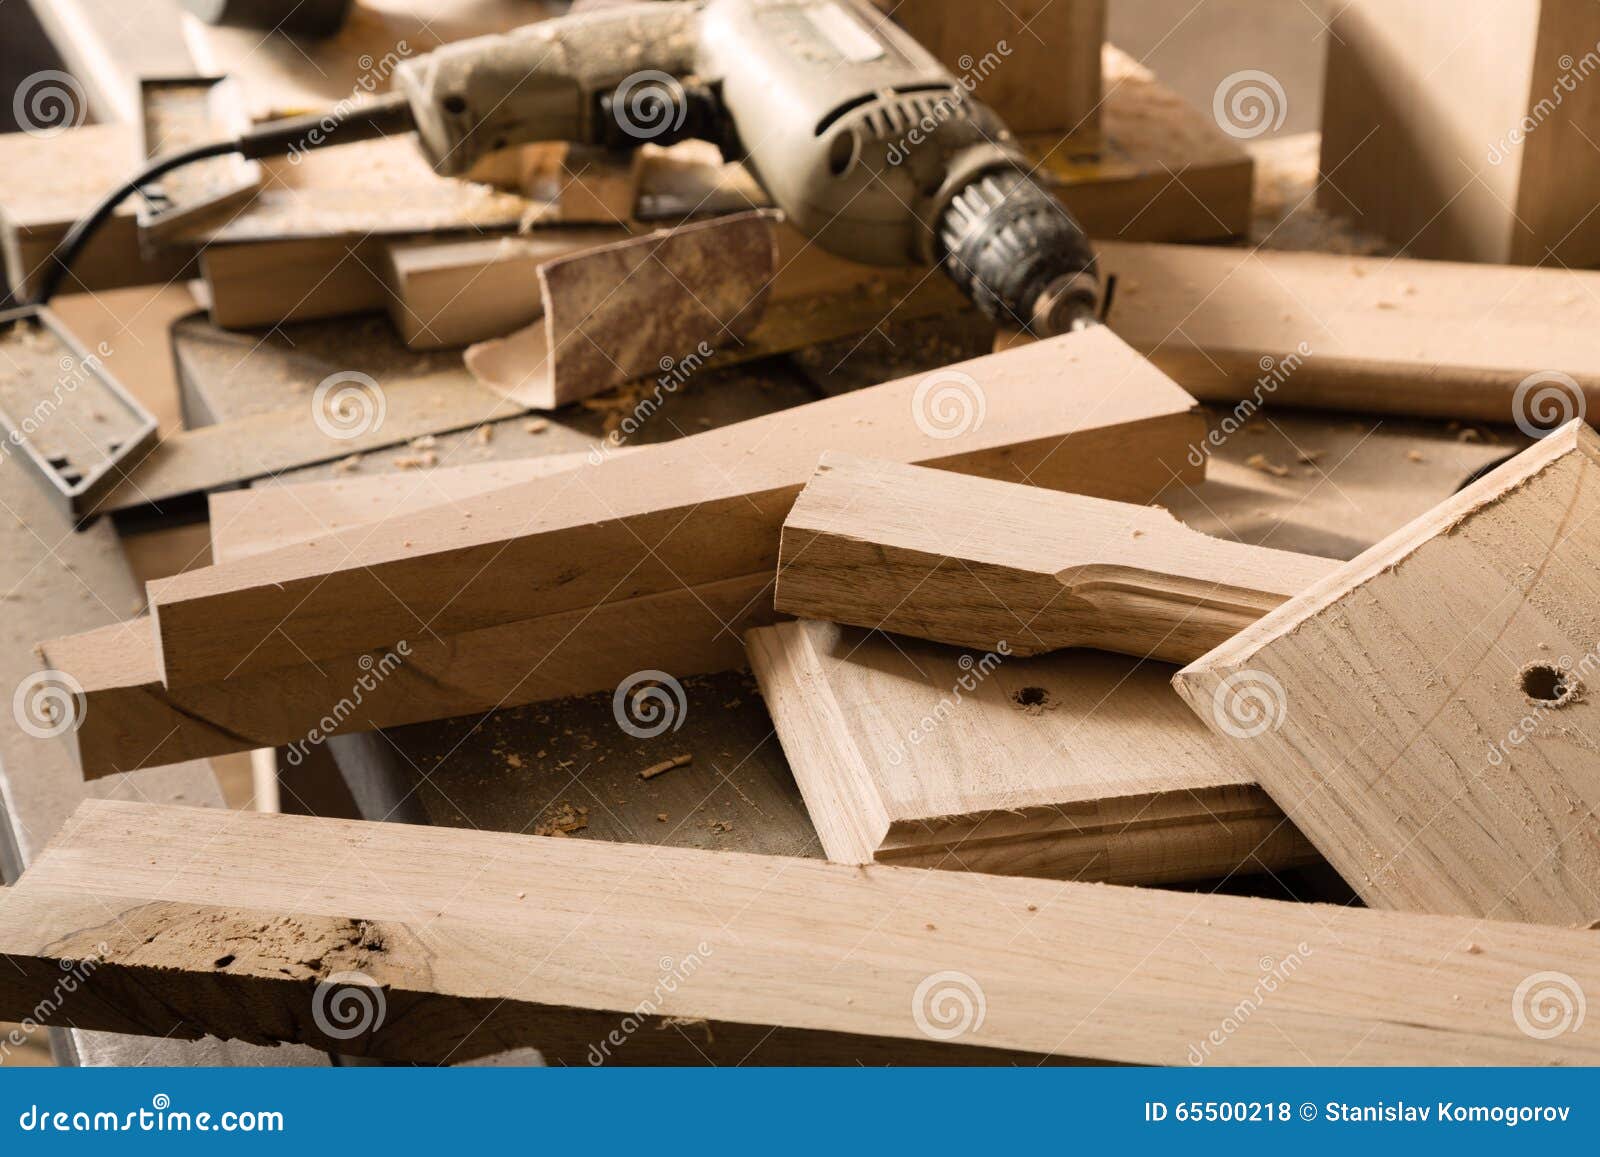 billets of wood for furniture lie on a workbench